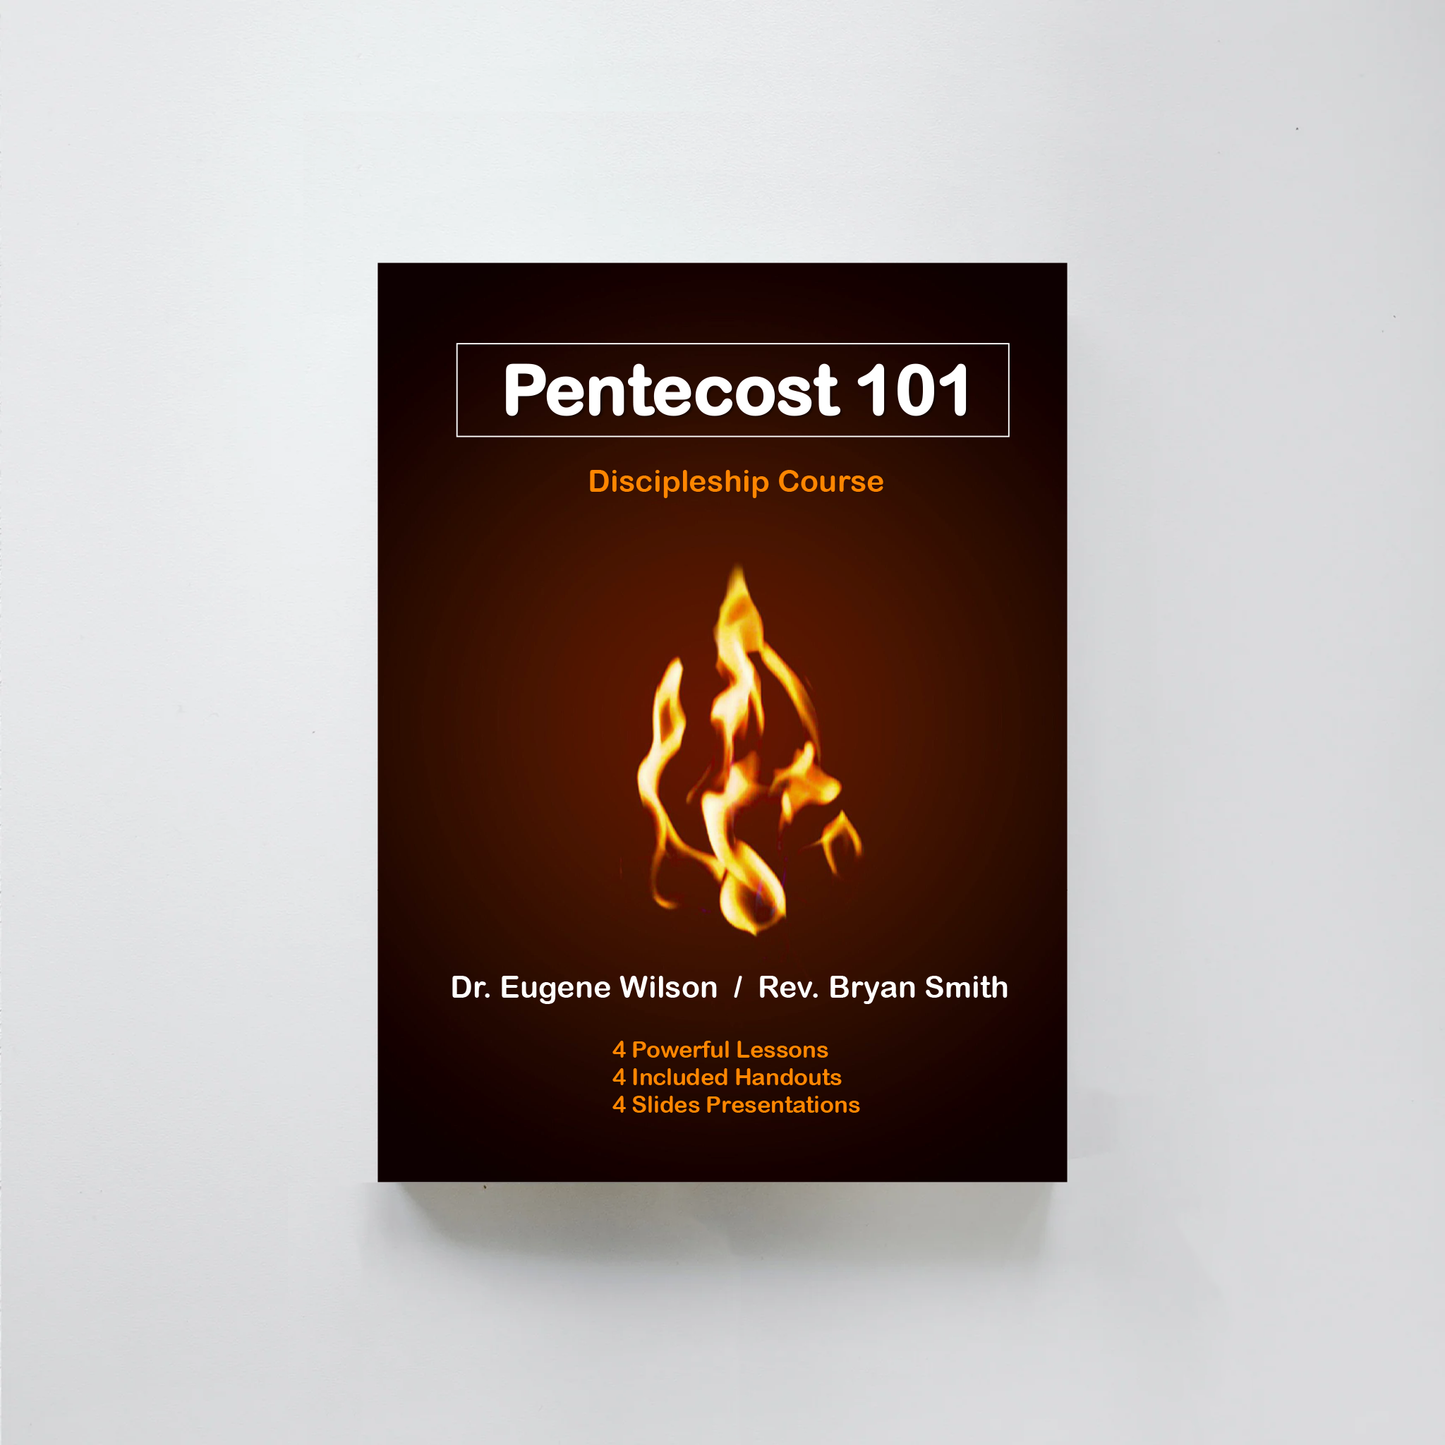 Pentecost 101